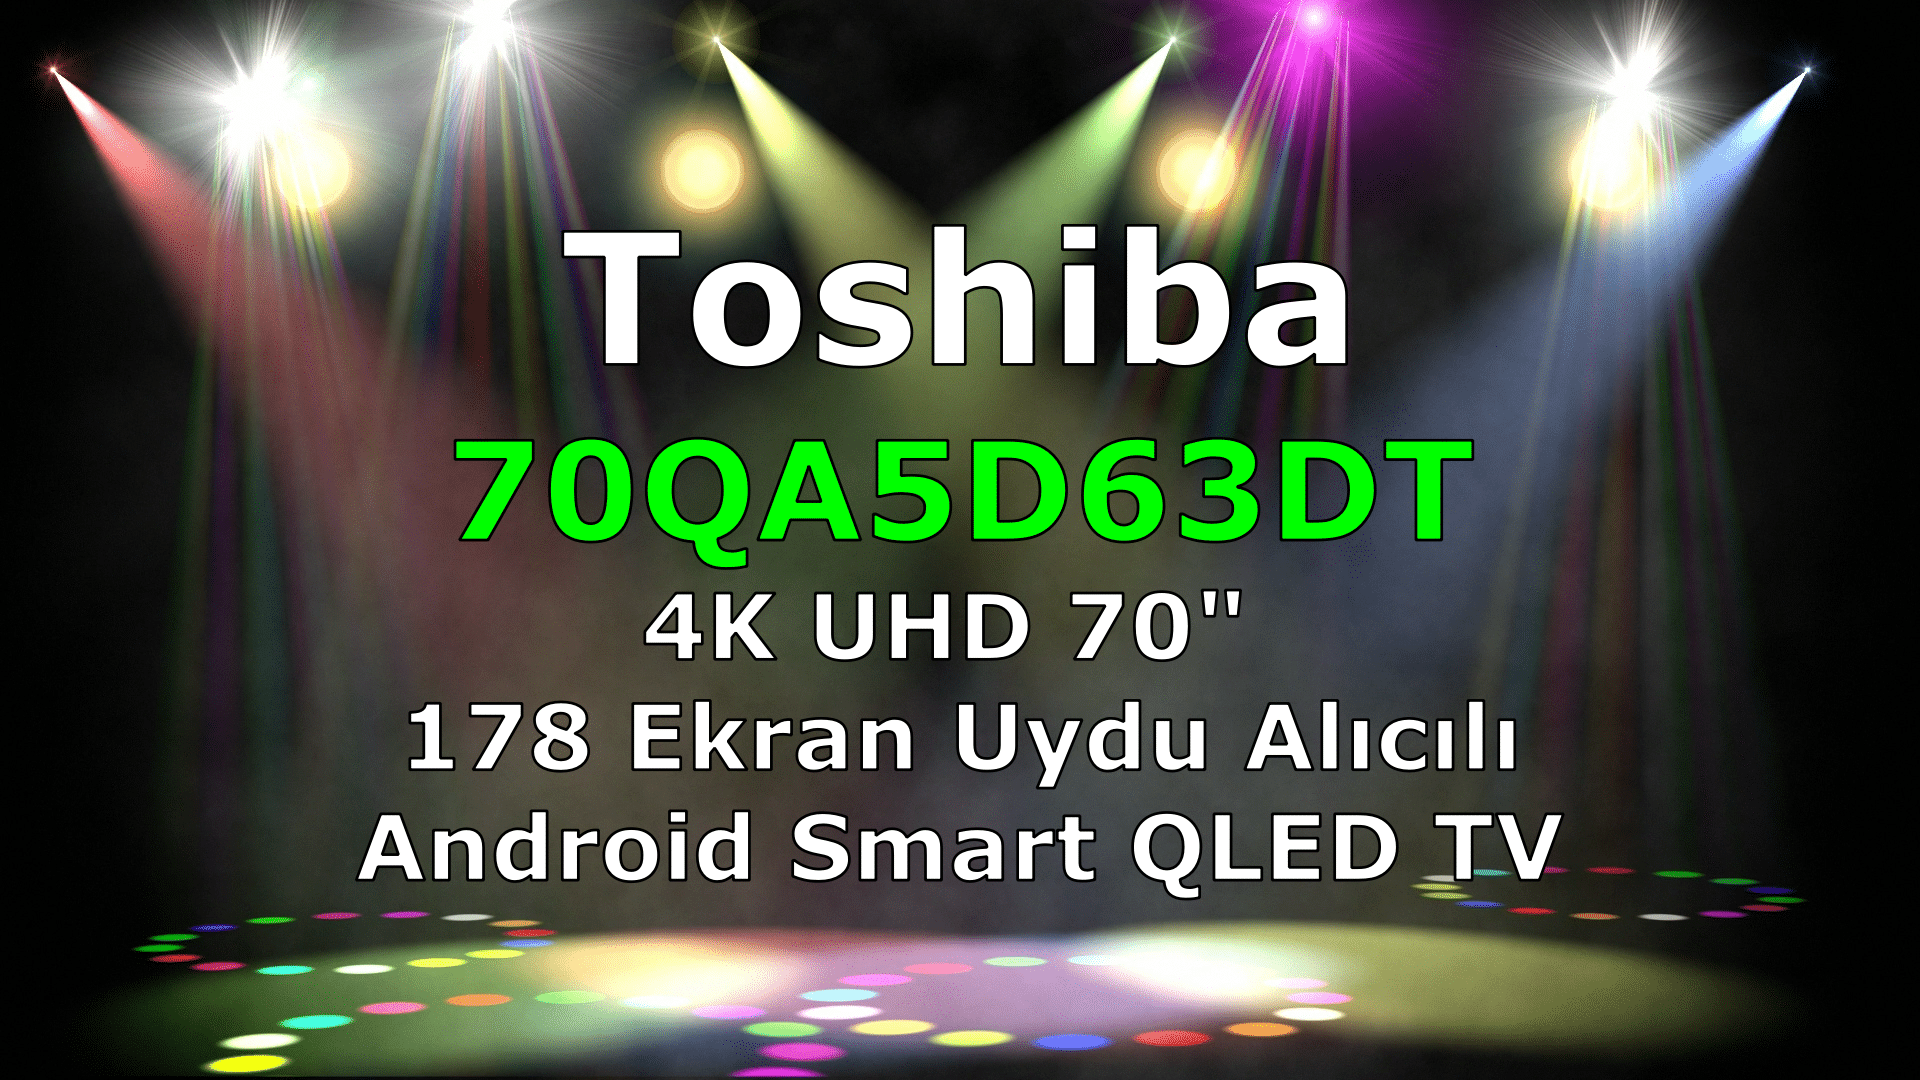 TOSHIBA 70QA5D63DT QLED Android TV Teknik Özellikleri